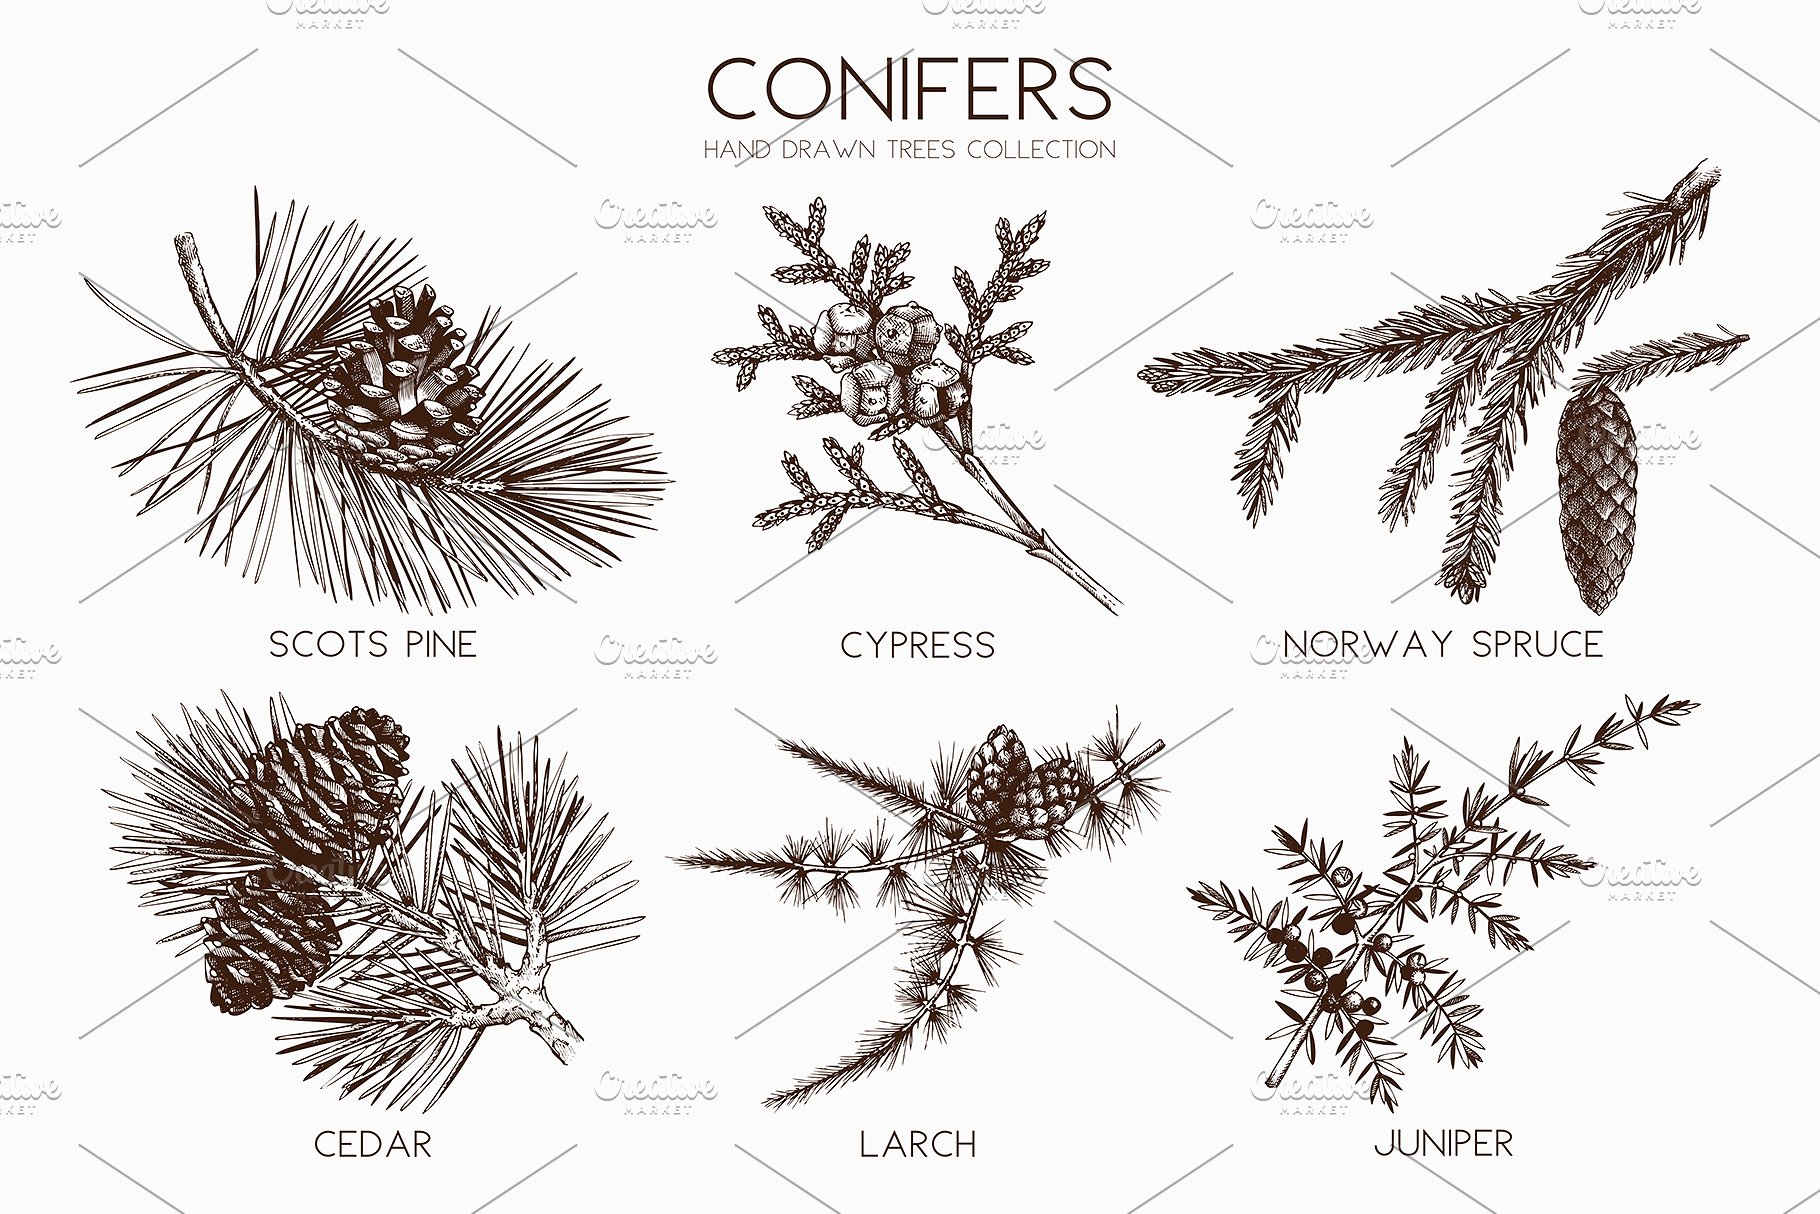 矢量针叶树图形素材集 Vector Conifer Trees Collection插图2